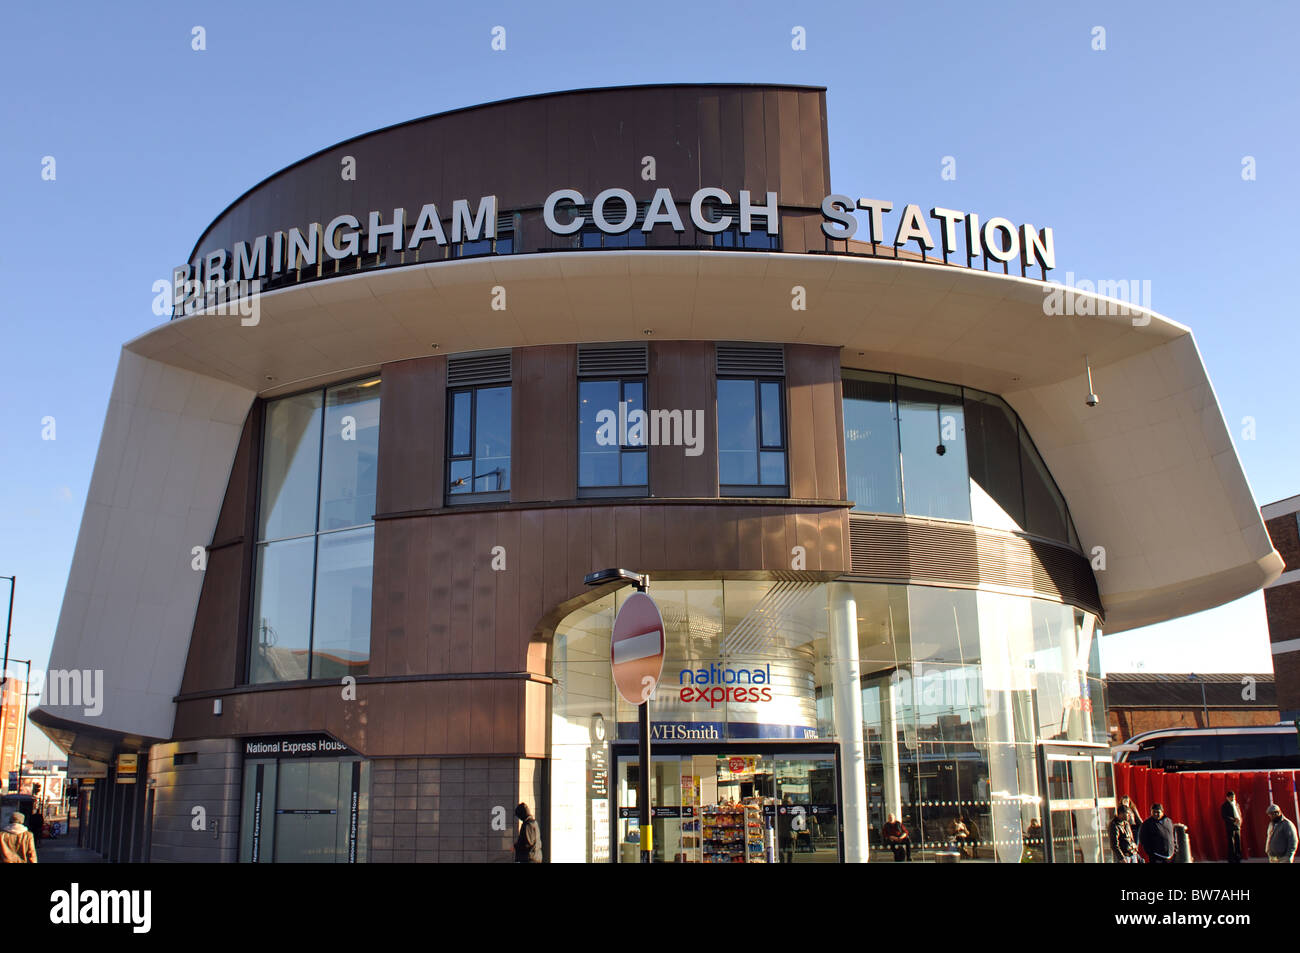 Birmingham Coach Station, Digbeth, Birmingham, UK Stock Photo - Alamy